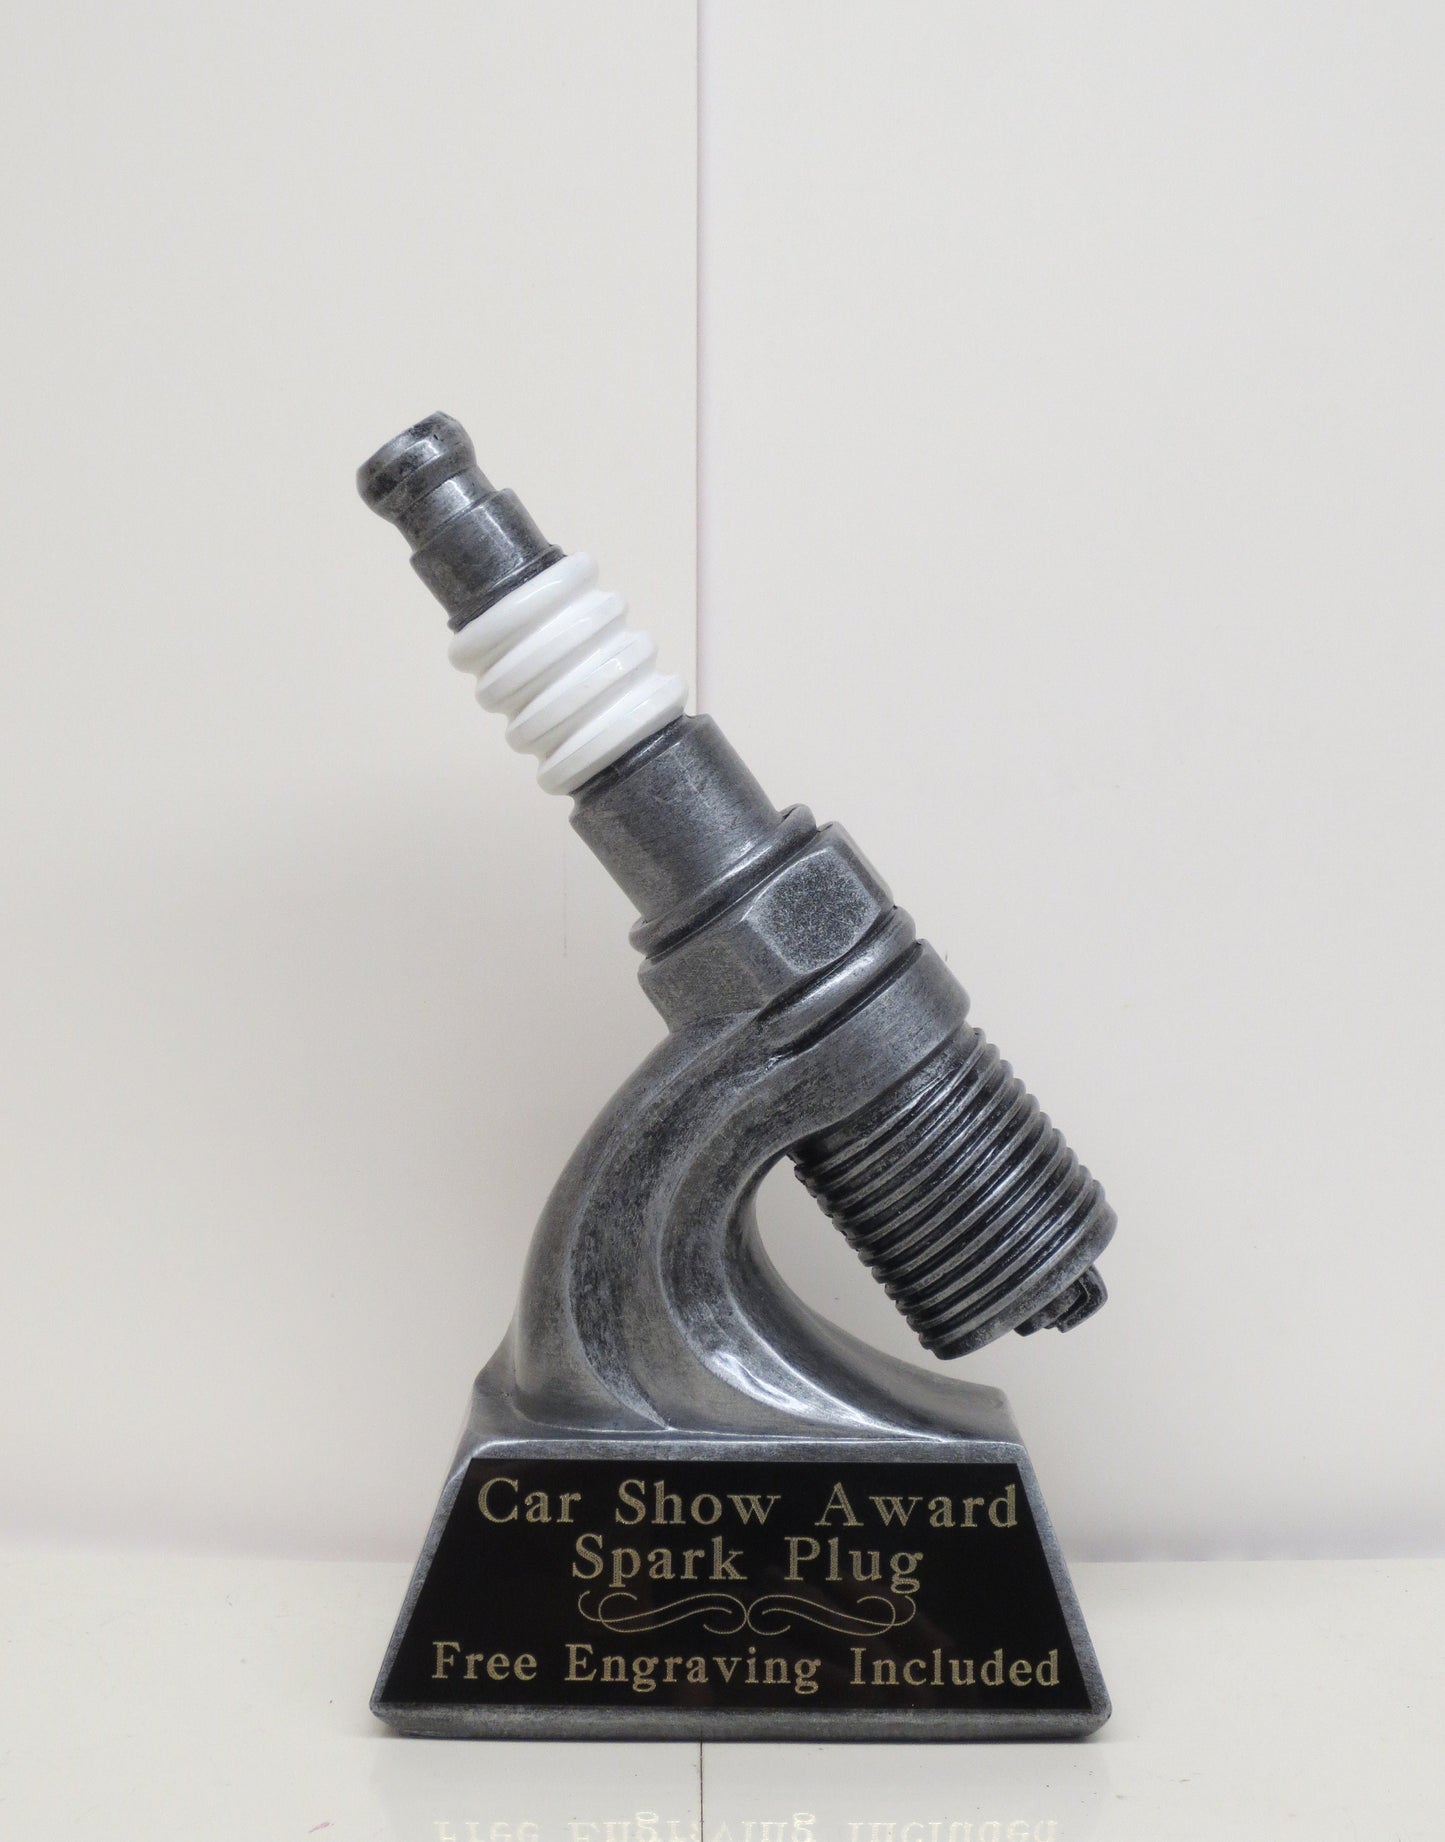 Car Show Trophy Racing Trophy 8" Spark Plug Hot Rod Trophy Silver Spark Plug Award Winner Best In Show Antique Car Show Participant Trophy